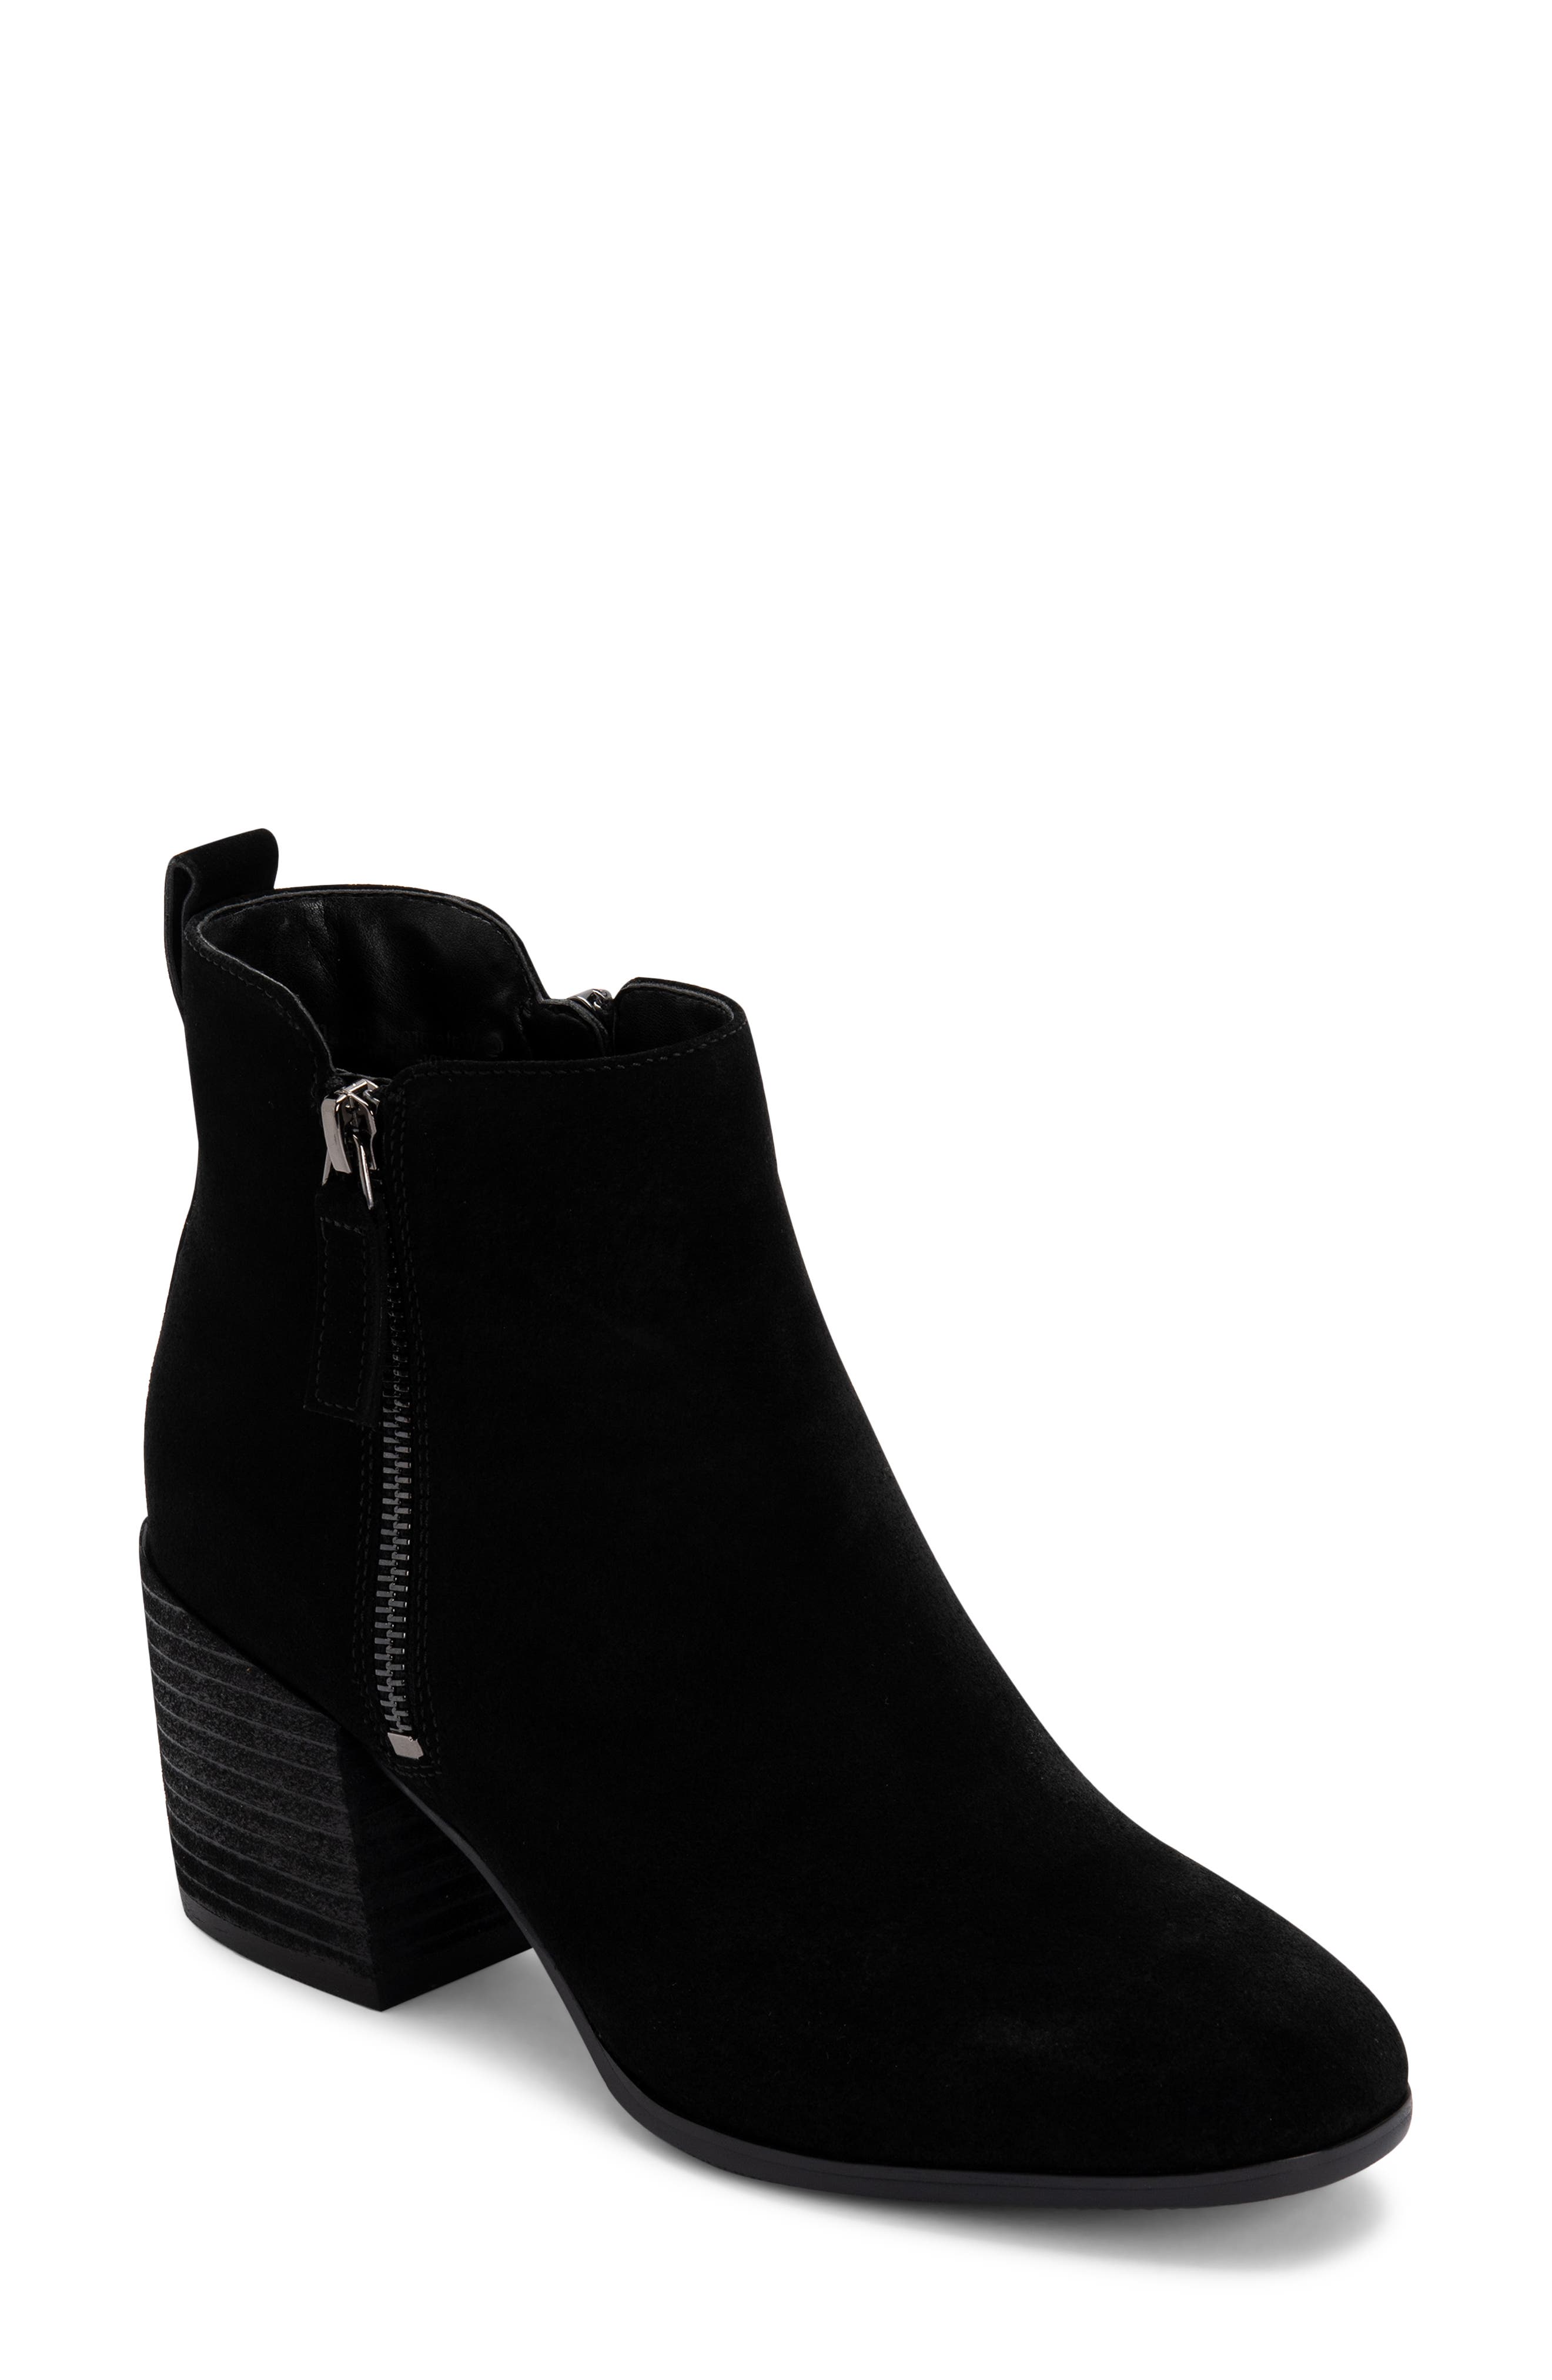 ladies black shoes